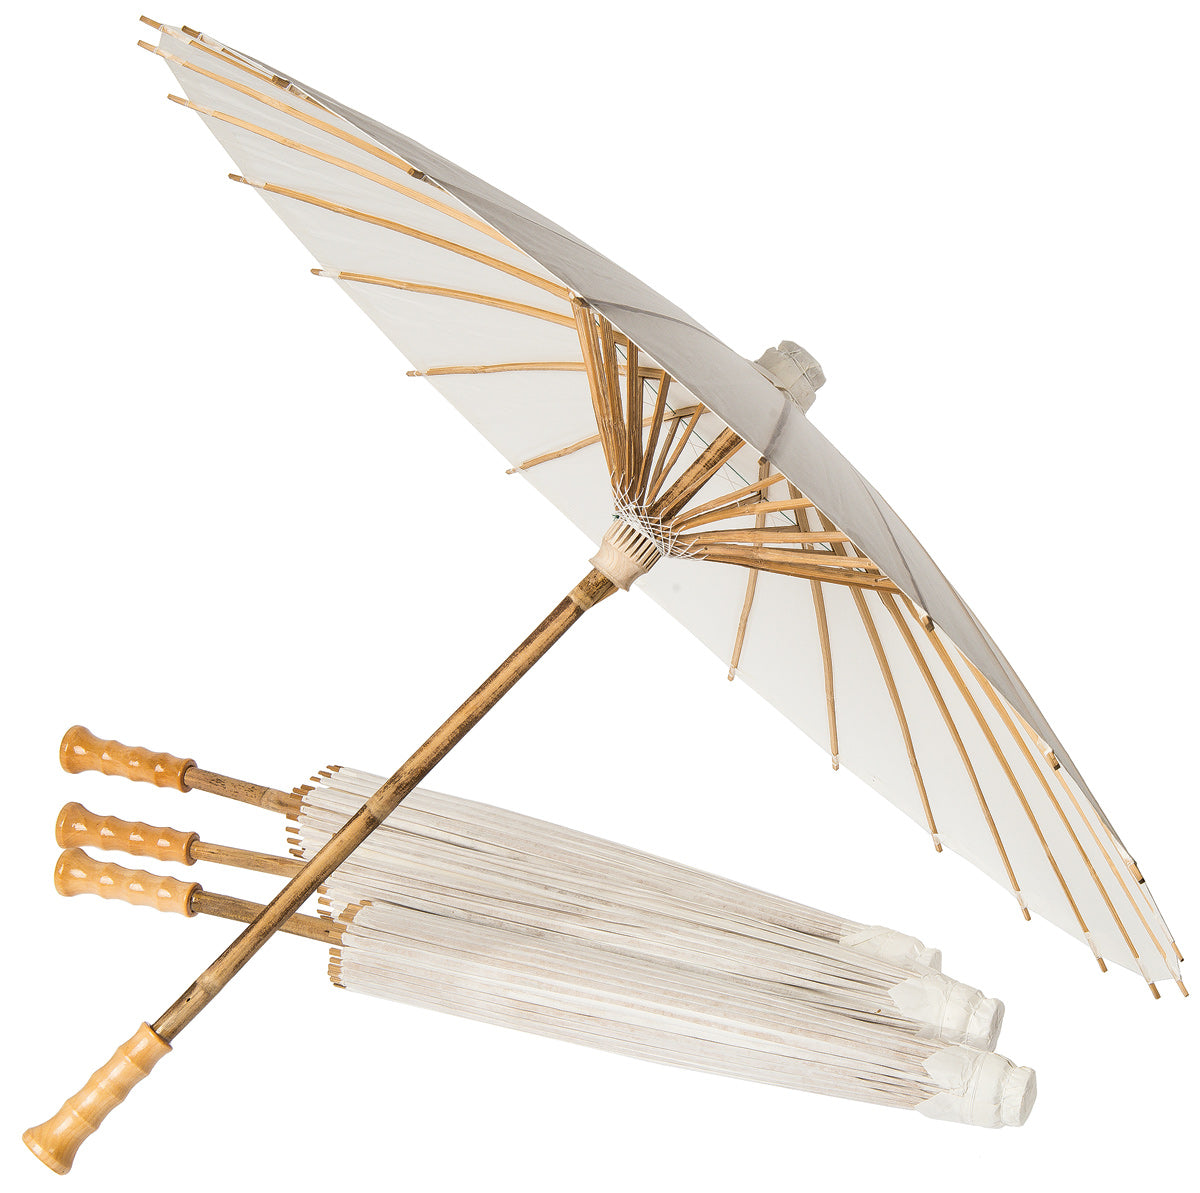 BULK PACK (10) 32" Wedding Beige / Ivory Paper Parasol Umbrellas with Elegant Handle - PaperLanternStore.com - Paper Lanterns, Decor, Party Lights & More